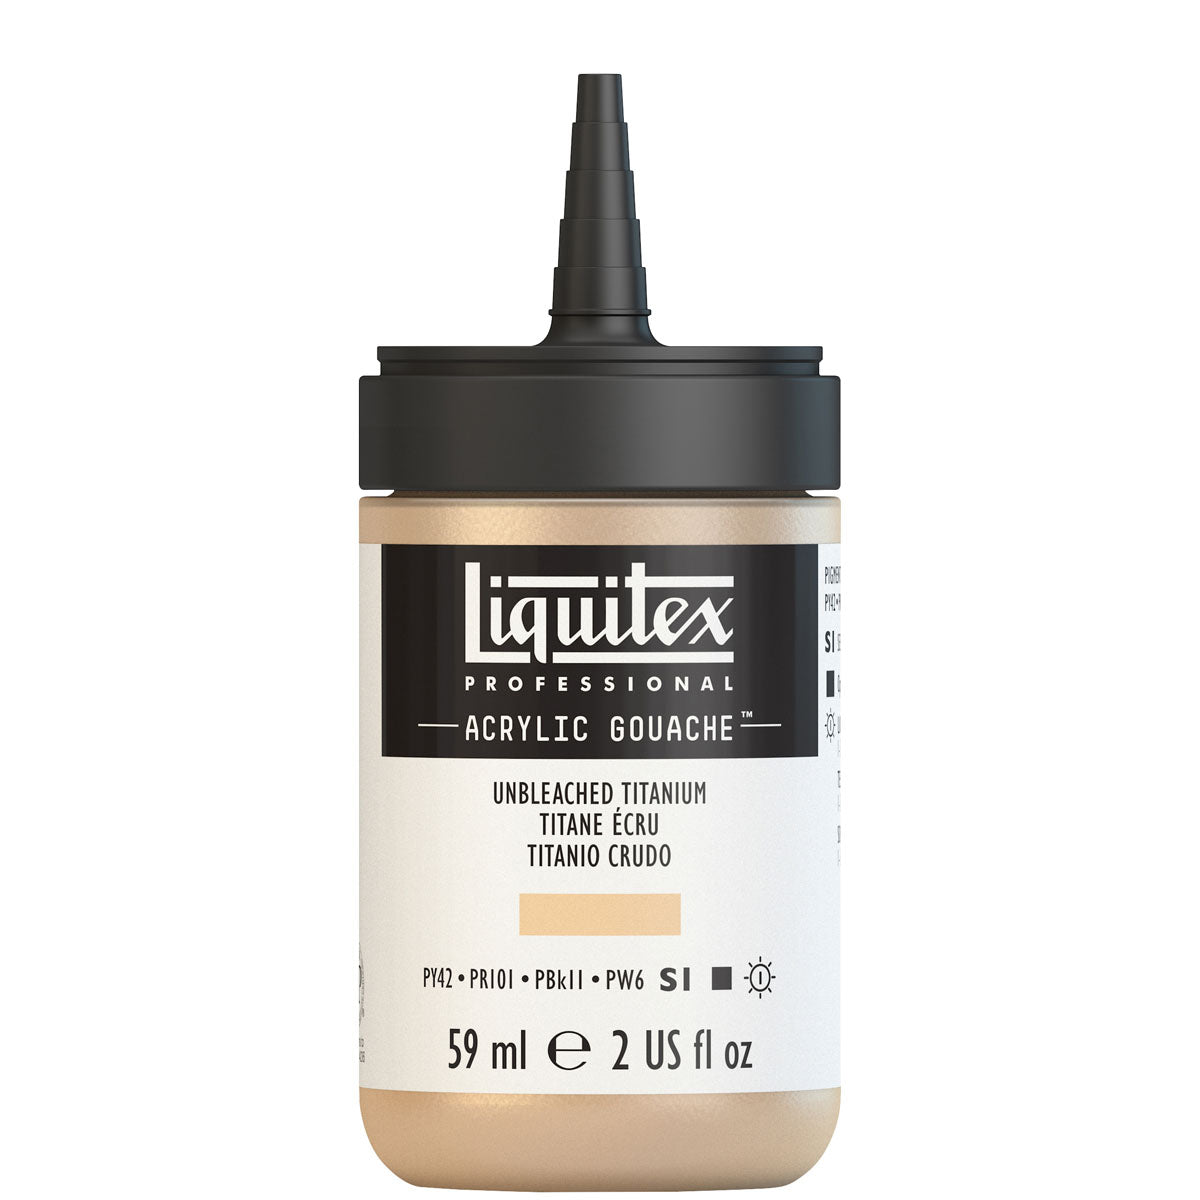 Liquitex - Acrylic Gouache 59ml S1 - Unbleached Titanium